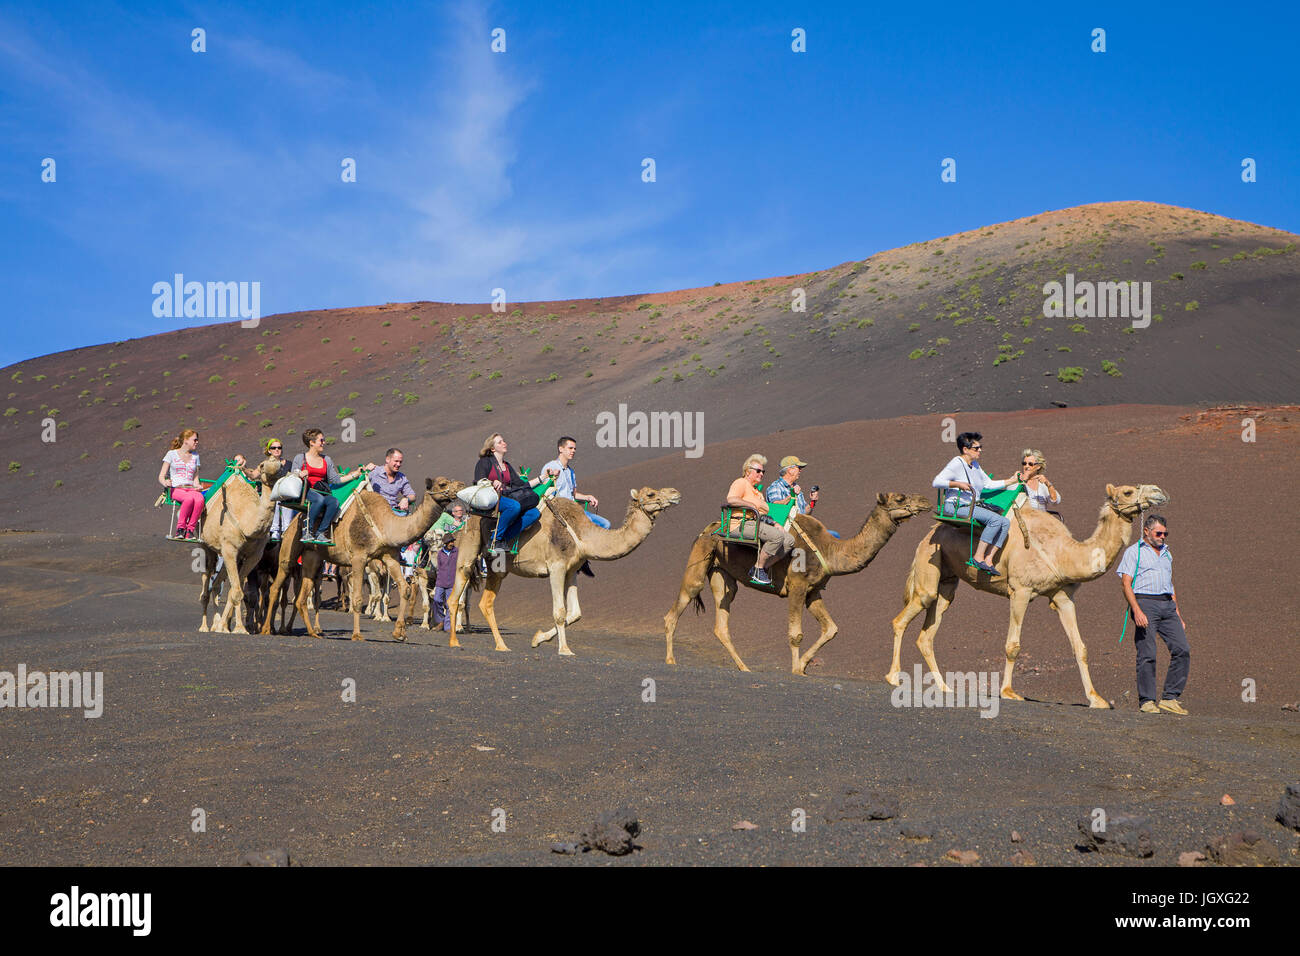 Touristen auf Dromedaren, einhoeckriges Kamel (Camelus dromedarius) im Nationalpark Timanfaya, Lanzarote, Kanarische Inseln, Europa | Tourists on drom Stock Photo